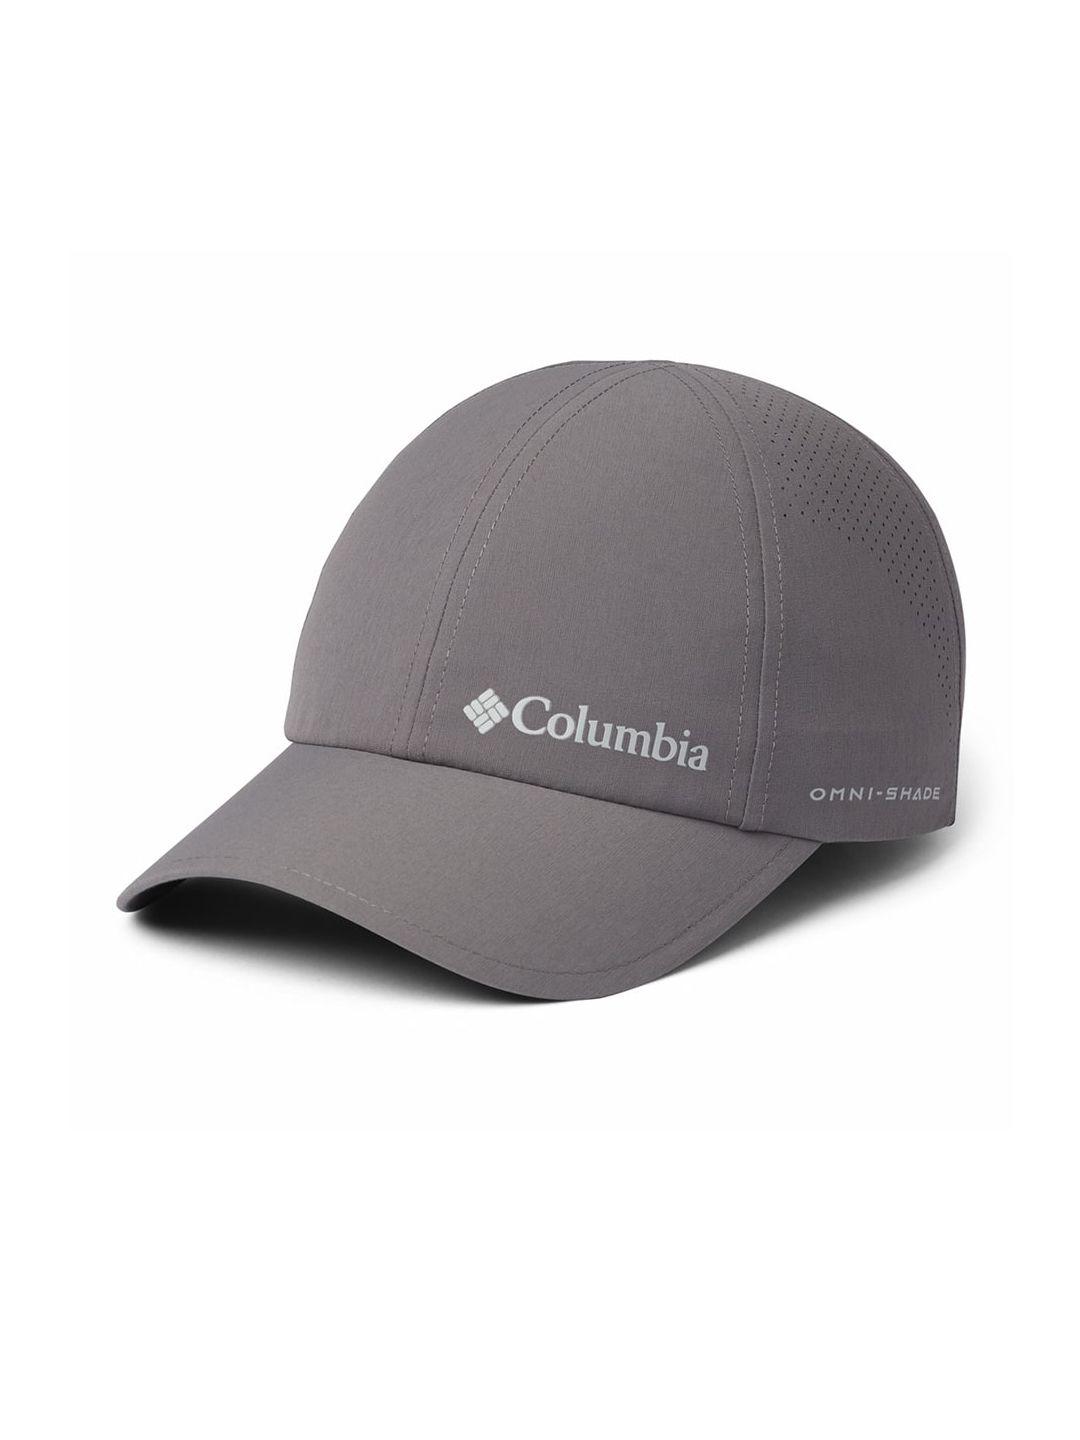 columbia unisex grey baseball cap with brand logo detail